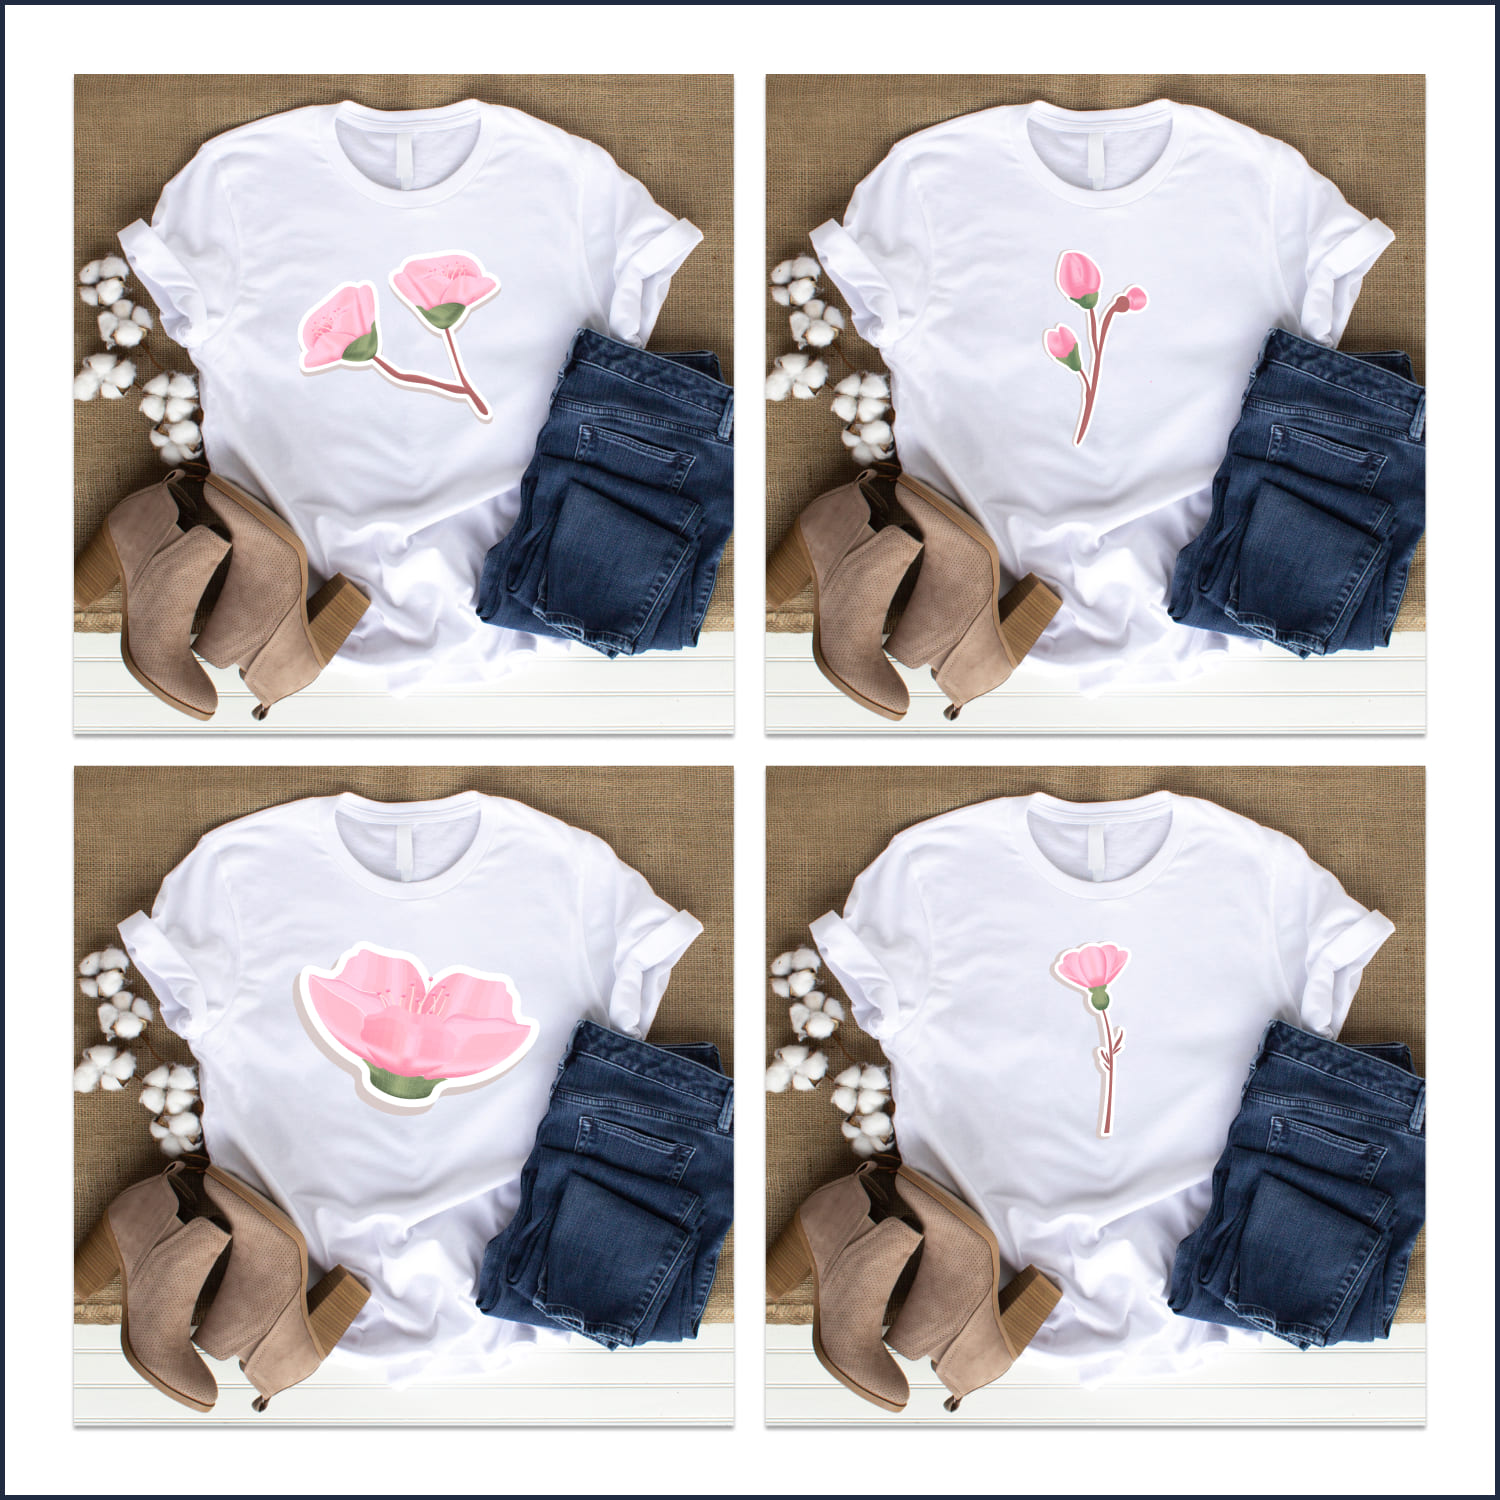 Prints cherry blossom on t shirt designs.